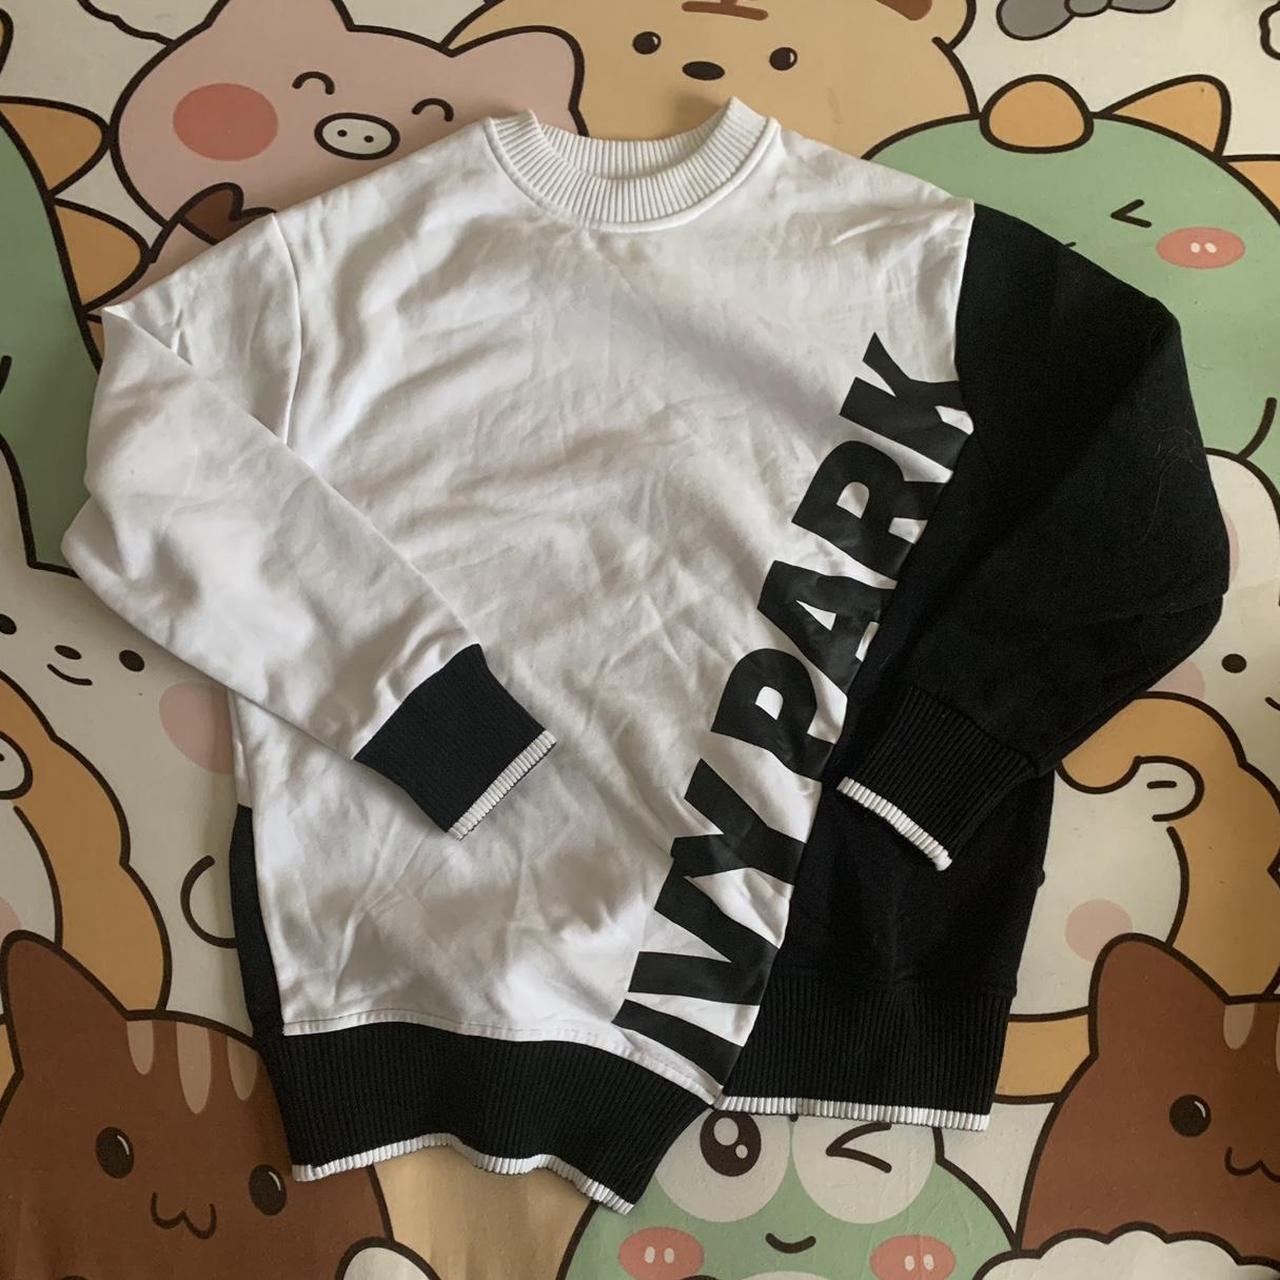 Ivy Park Women's Black and White Sweatshirt | Depop